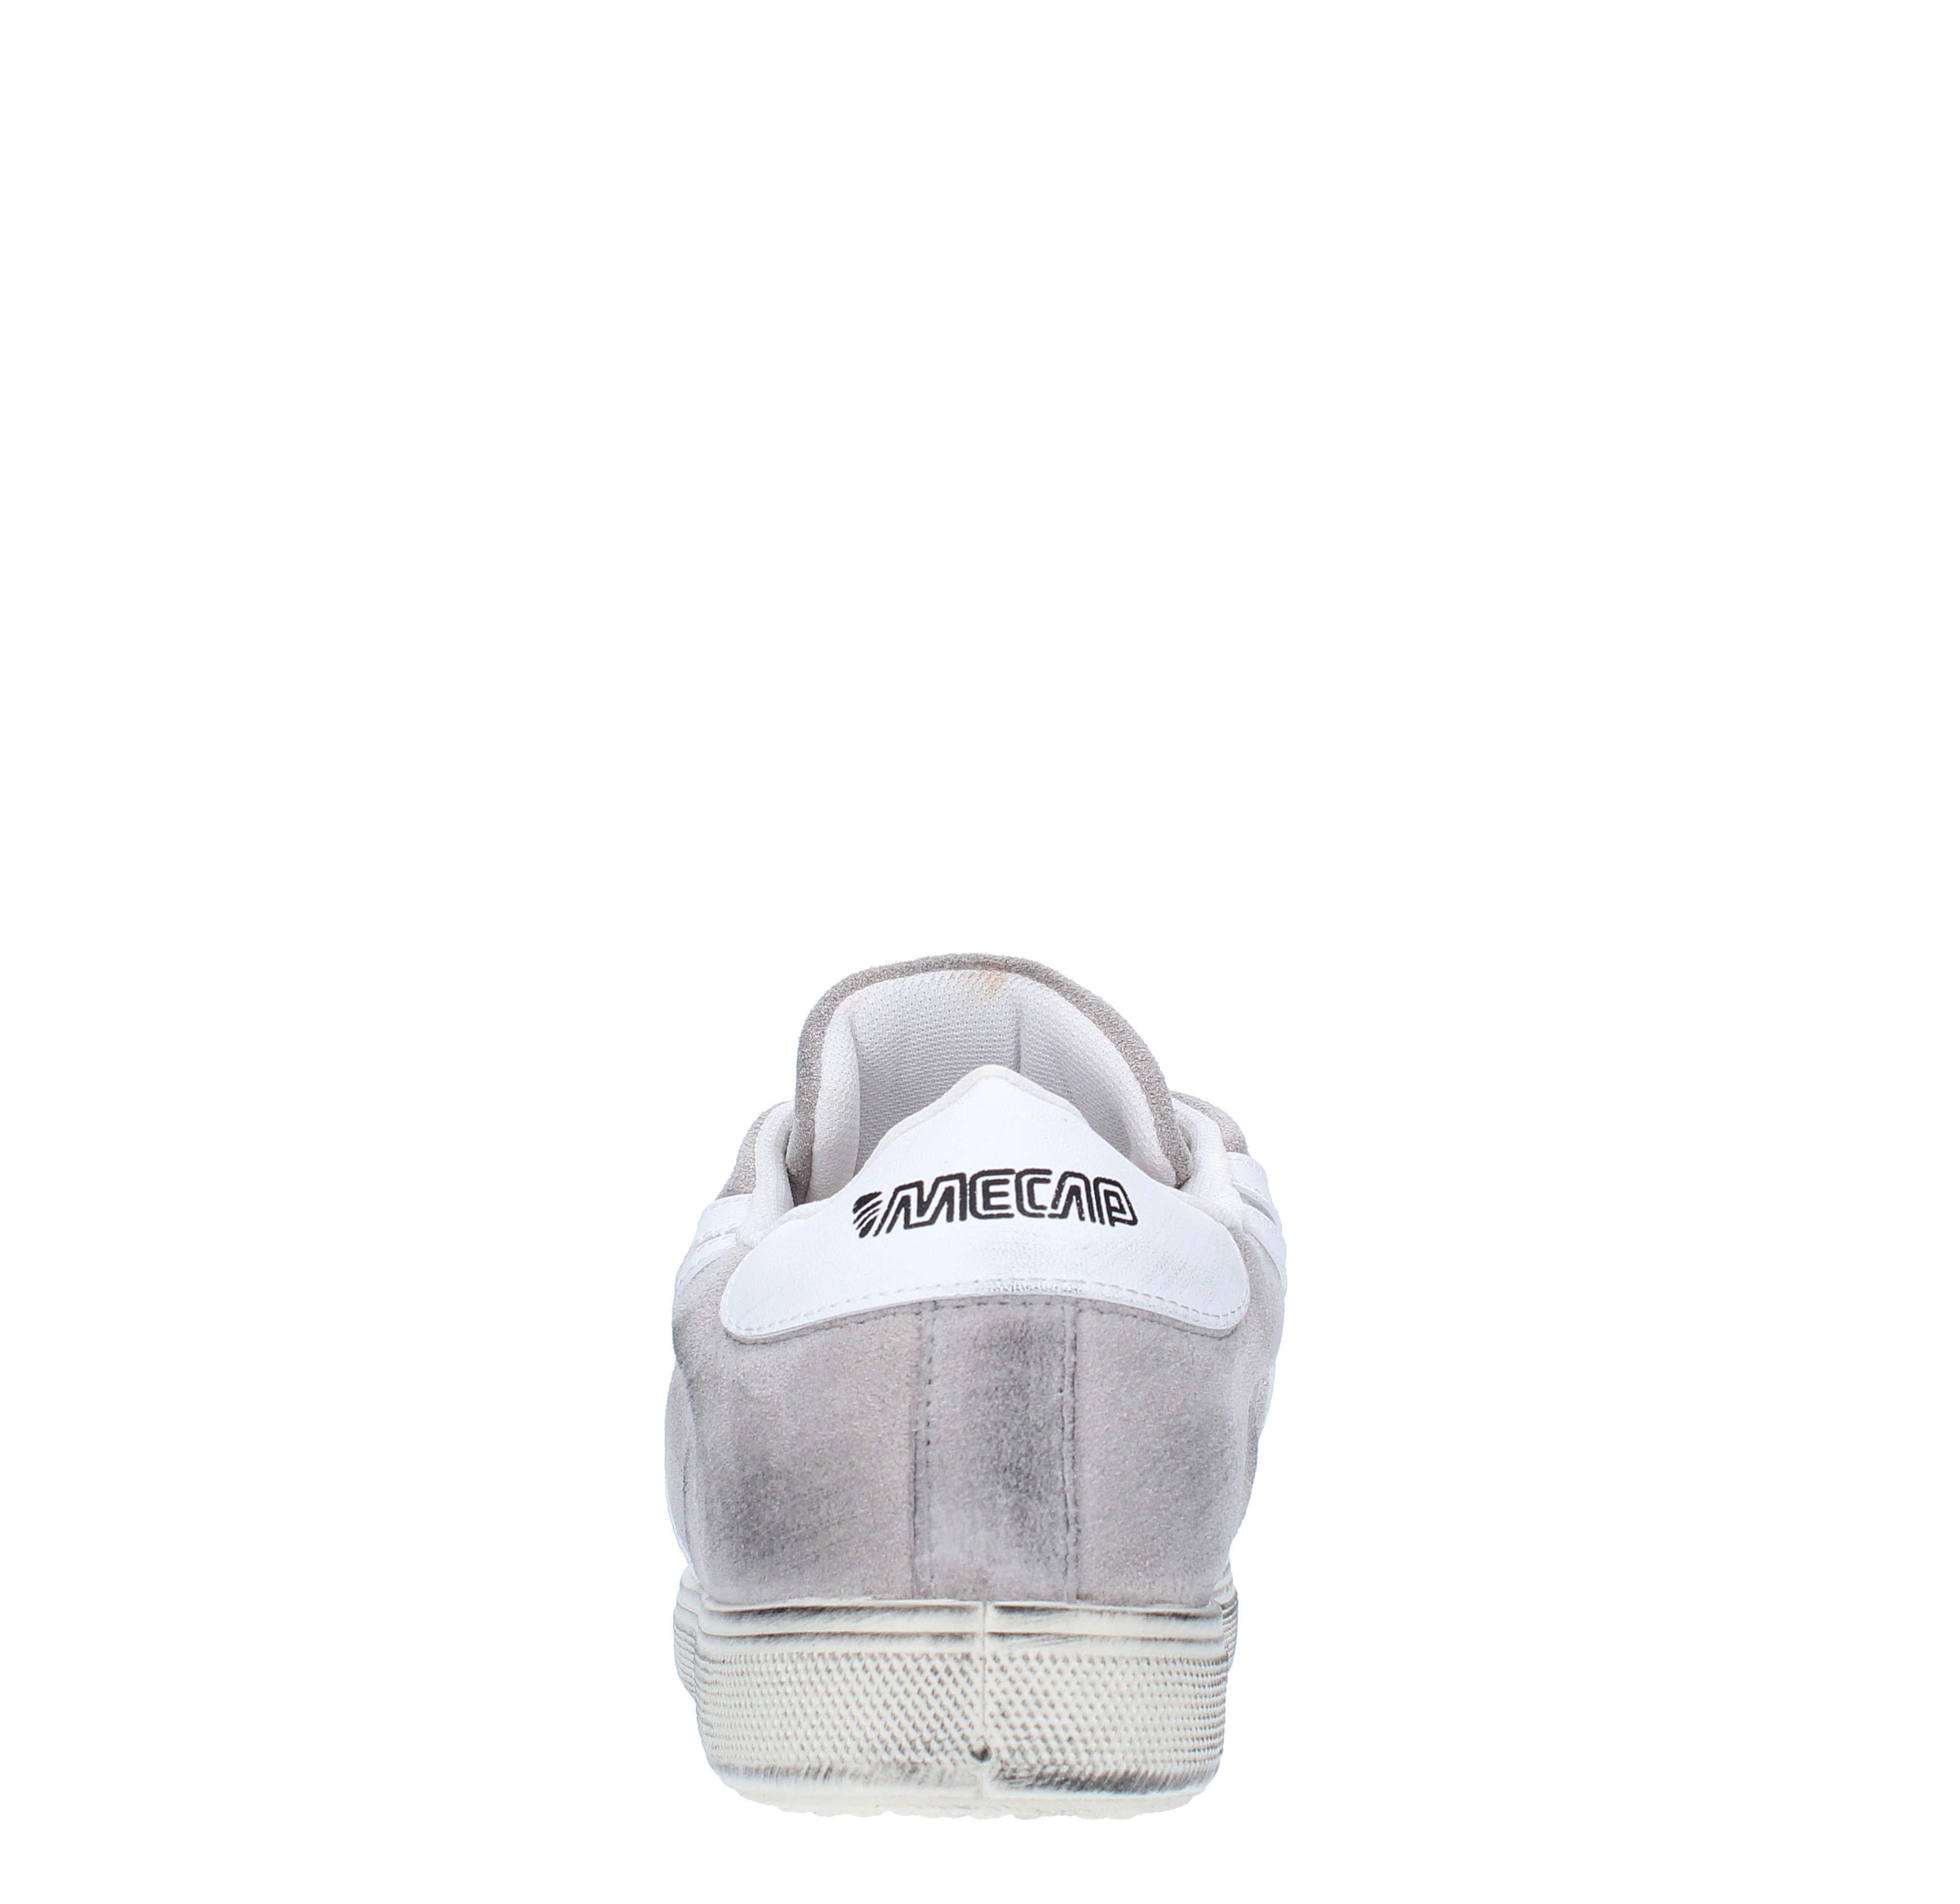 Sneakers in camoscio e ecopelle - MECAP - Ginevra calzature